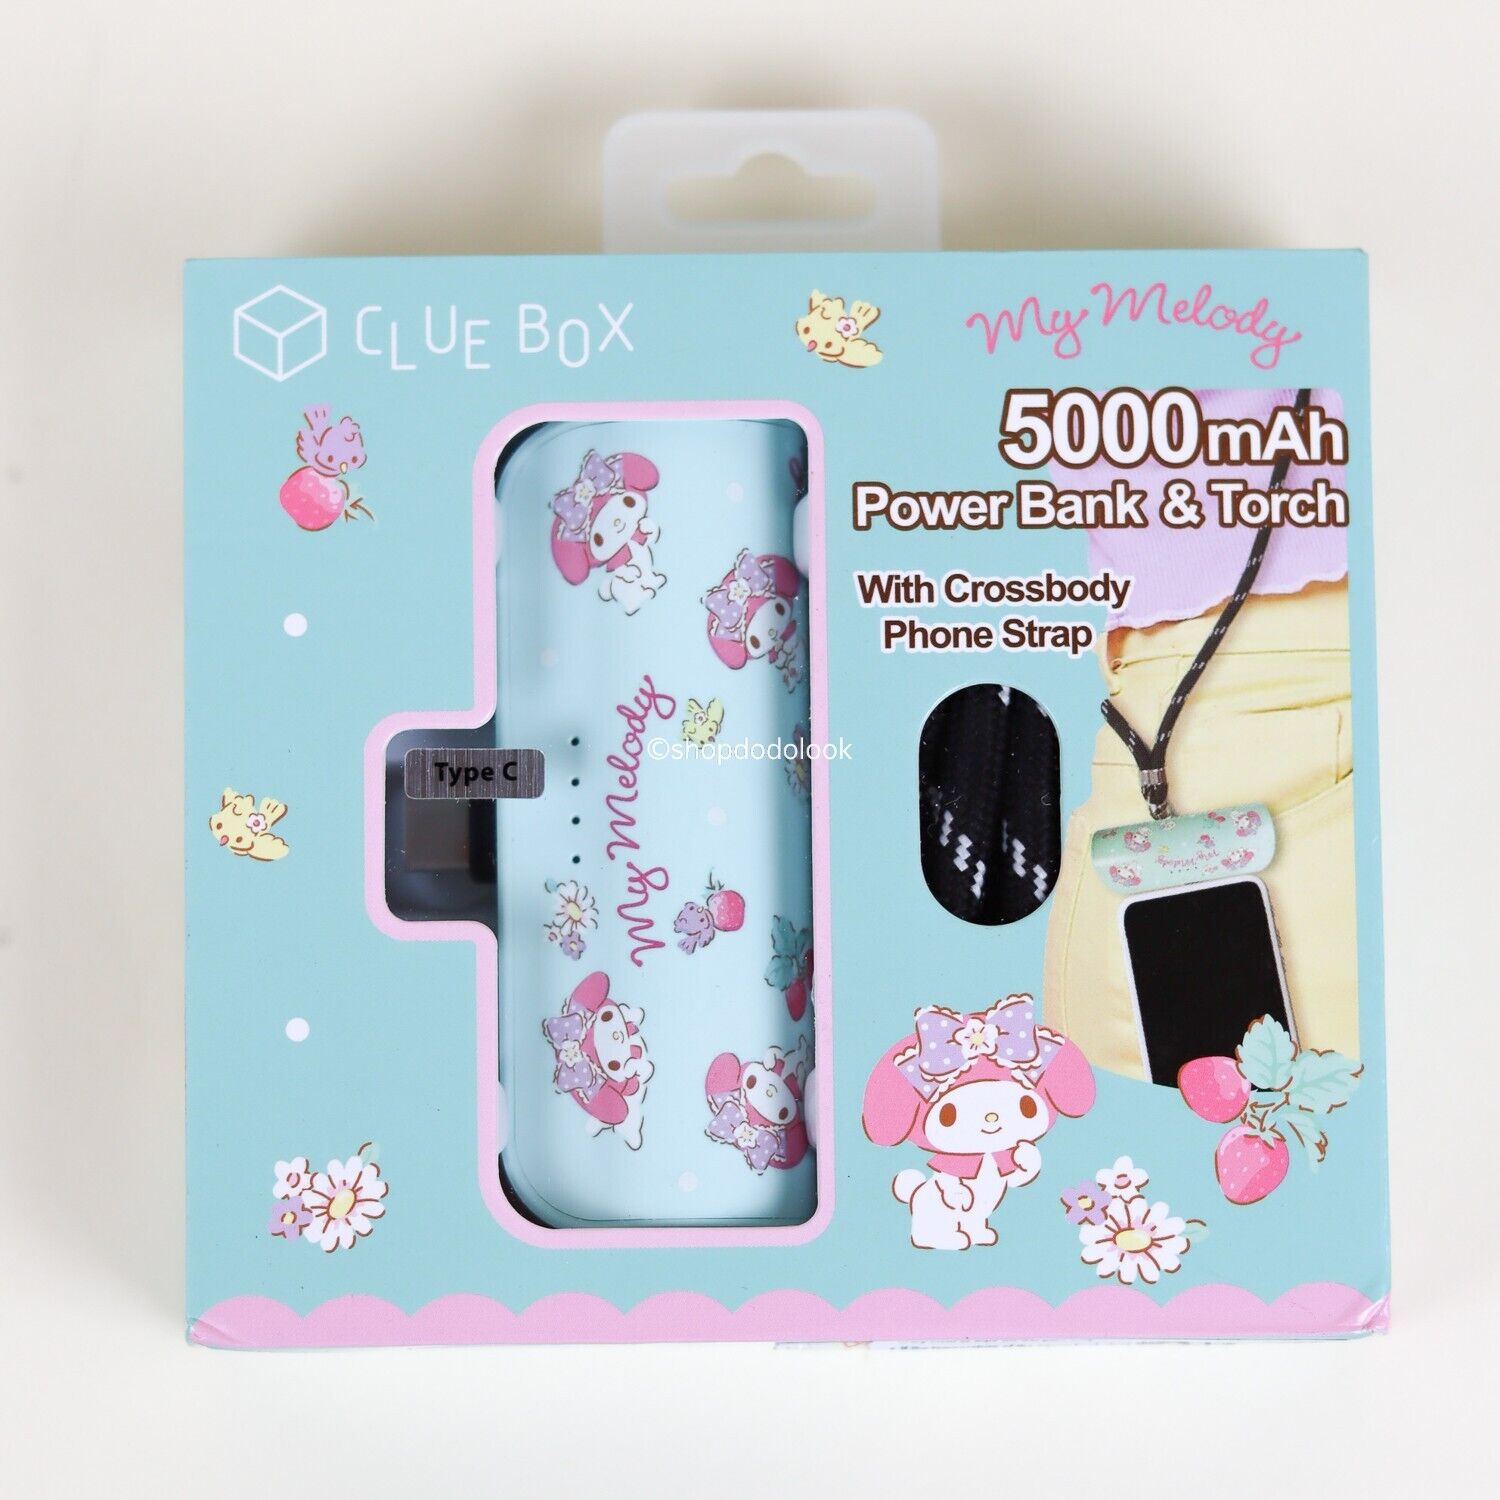 Sanrio Cluebox My Melody 5000mAh Power Type C Bank&Torch 3.5\